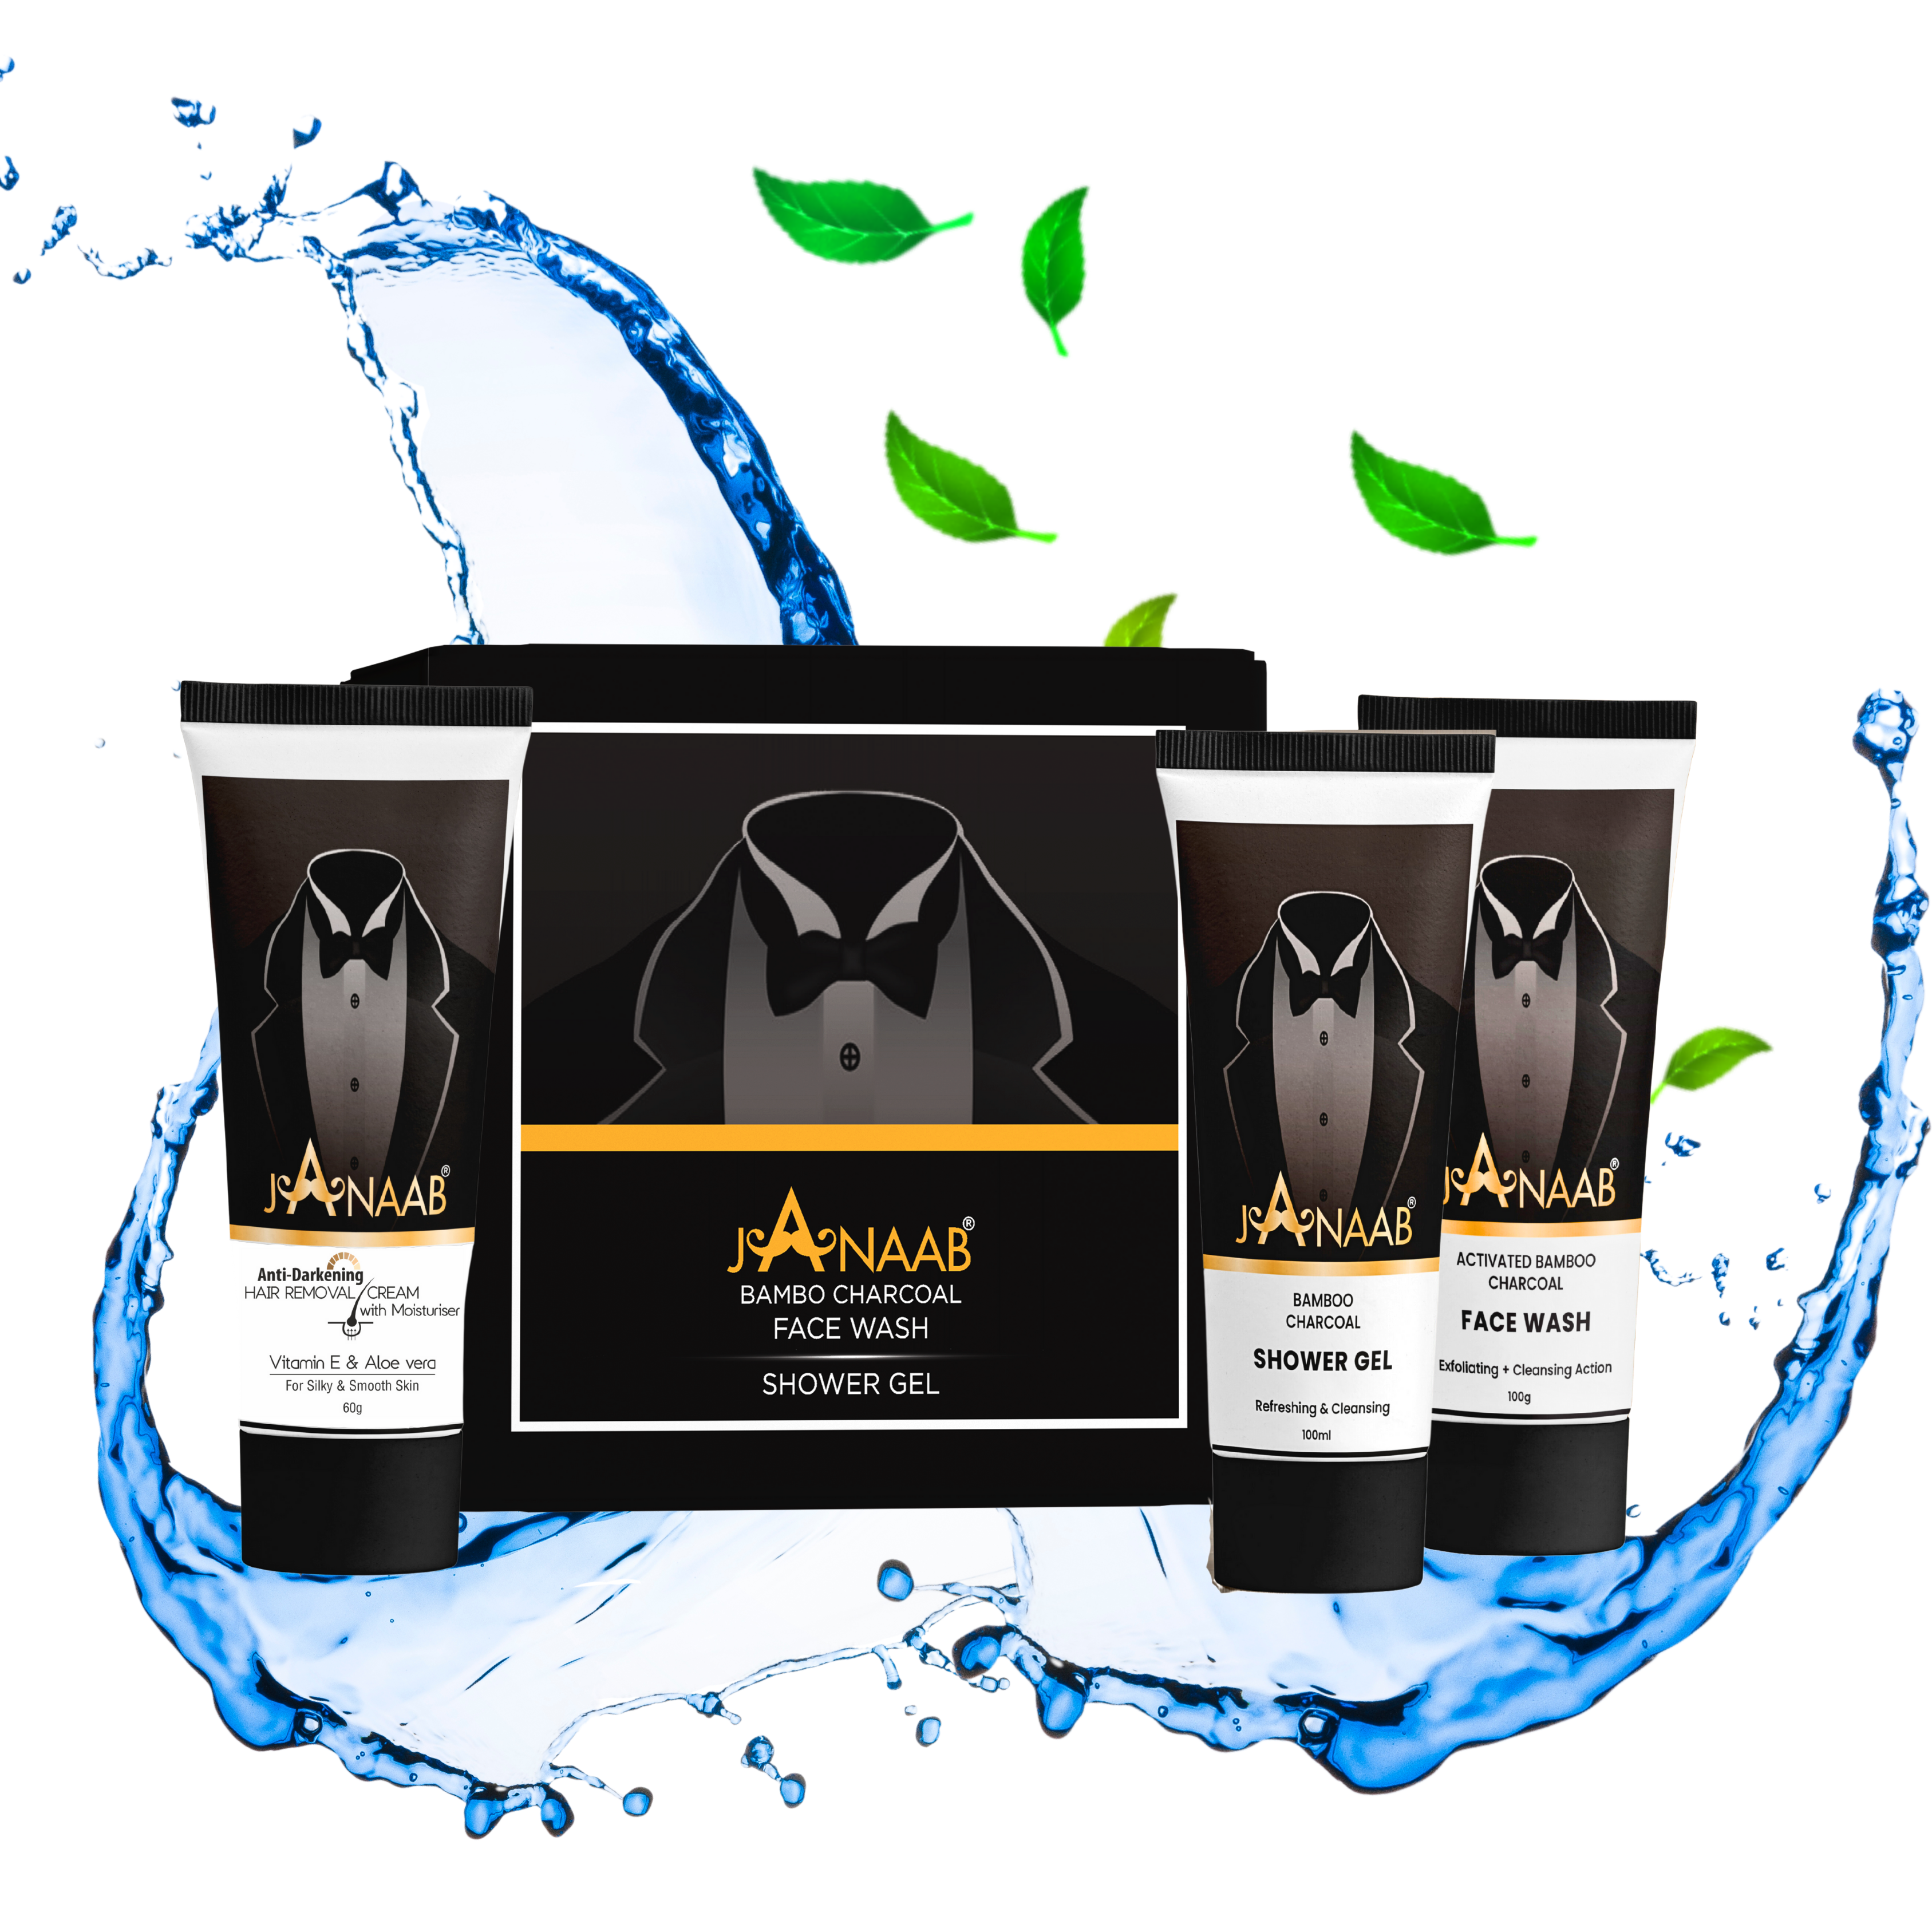 Janaab Activated Bamboo Charcoal Face Wash, Janaab Shower Gel, Free Hair Removal Cream